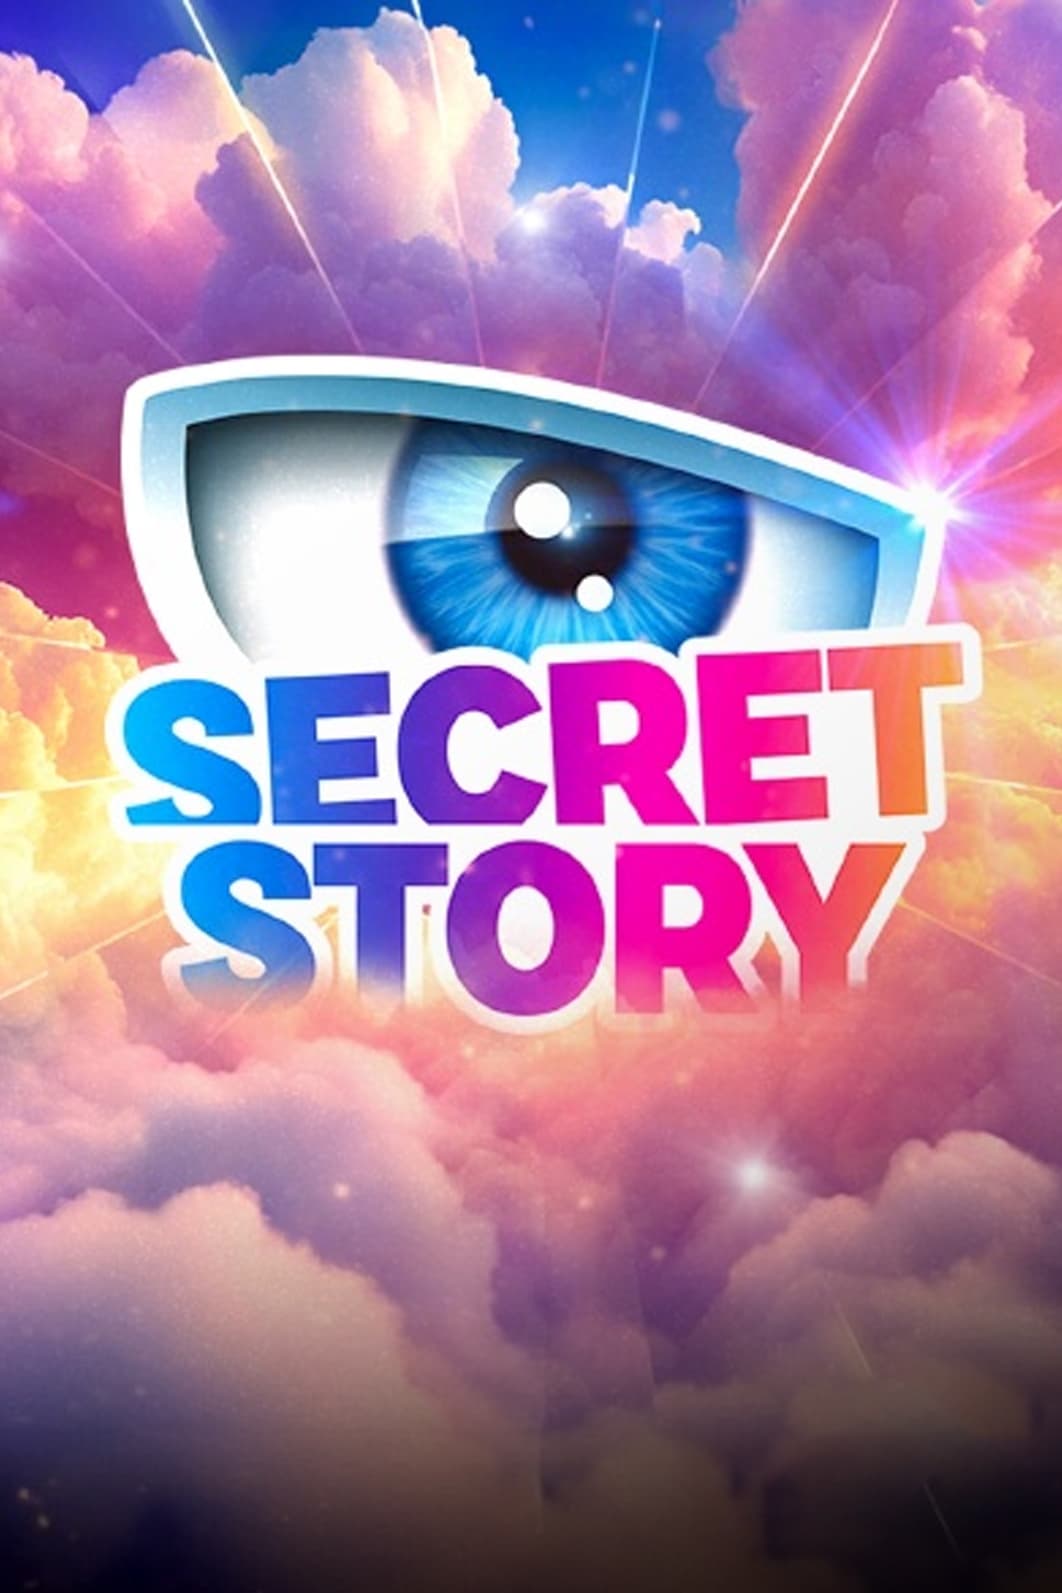 Secret Story (2007)